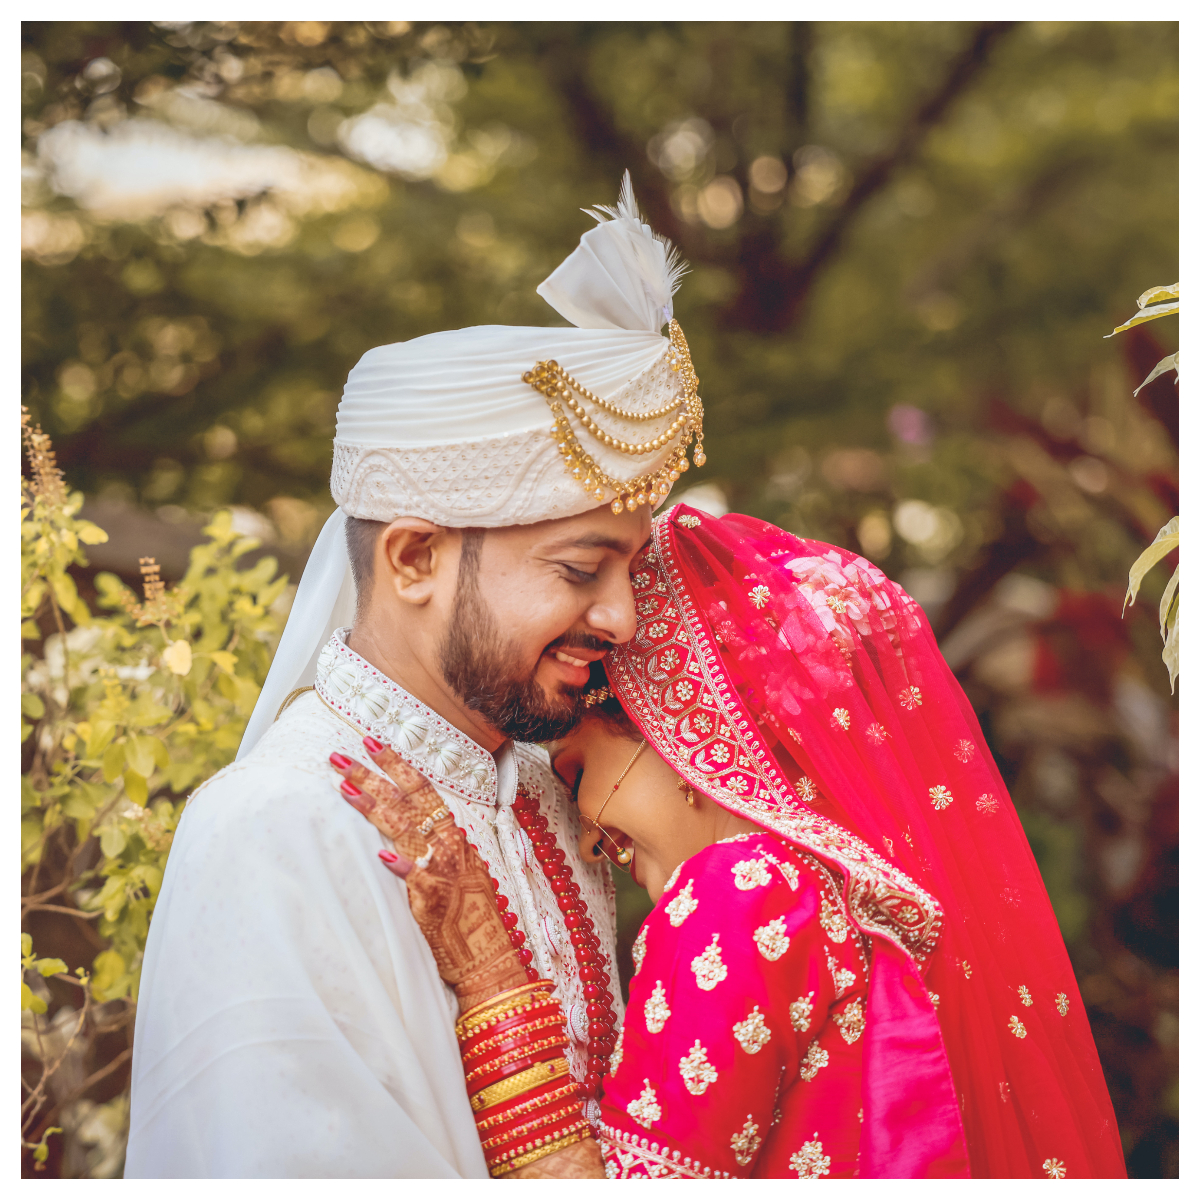 VISHAL  Indian wedding photography poses Indian wedding poses Wedding  couple poses